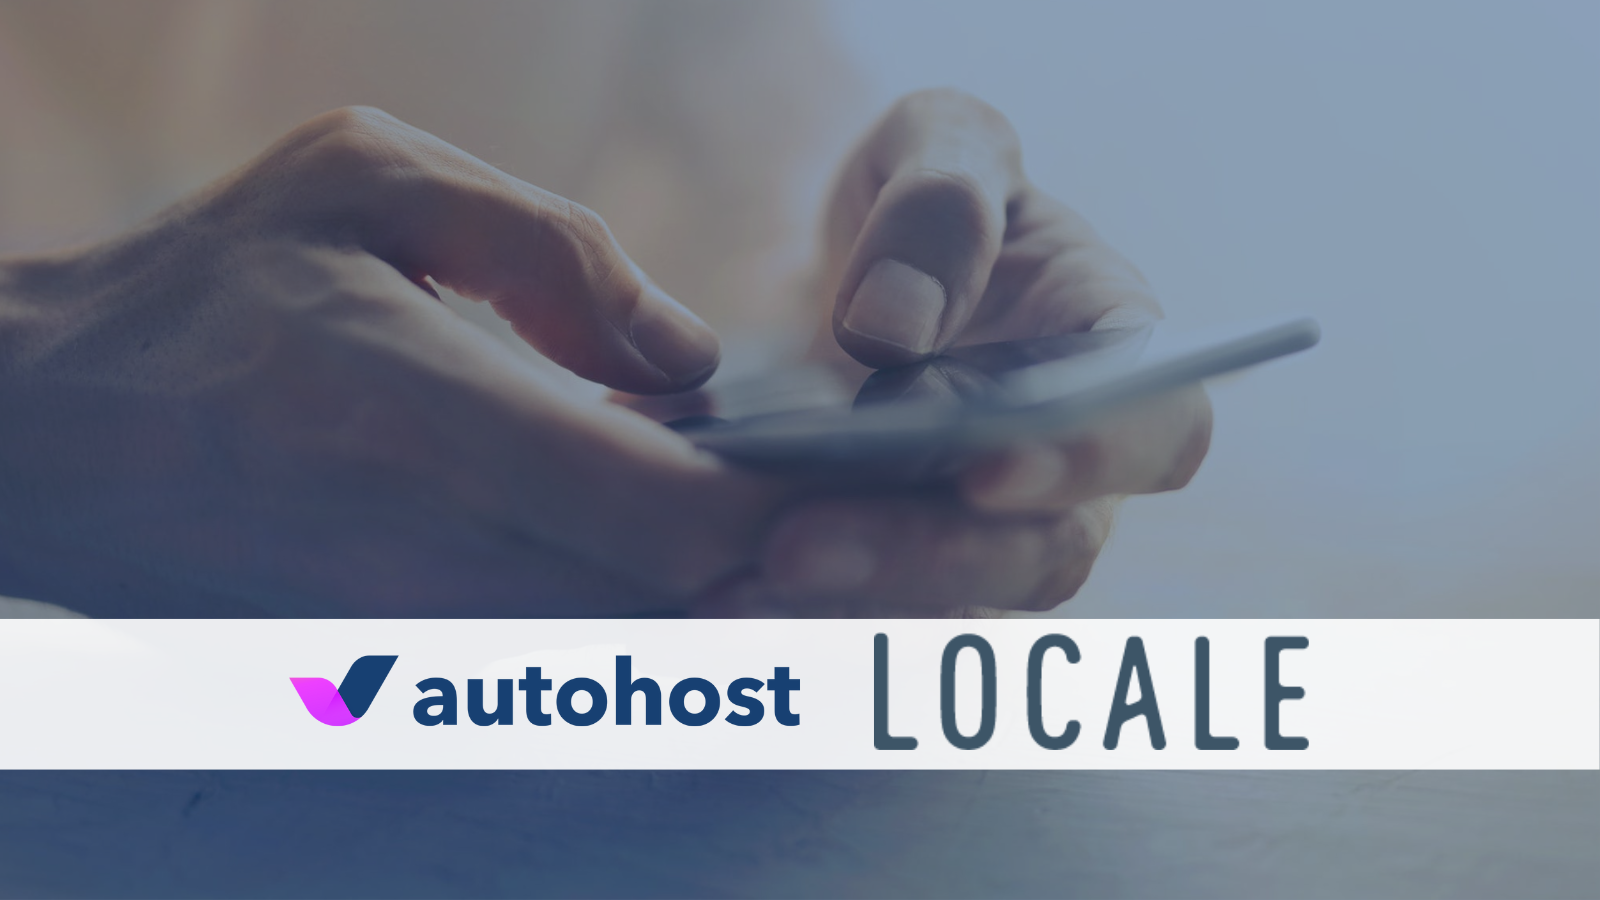 Autohost Locale featured image 1